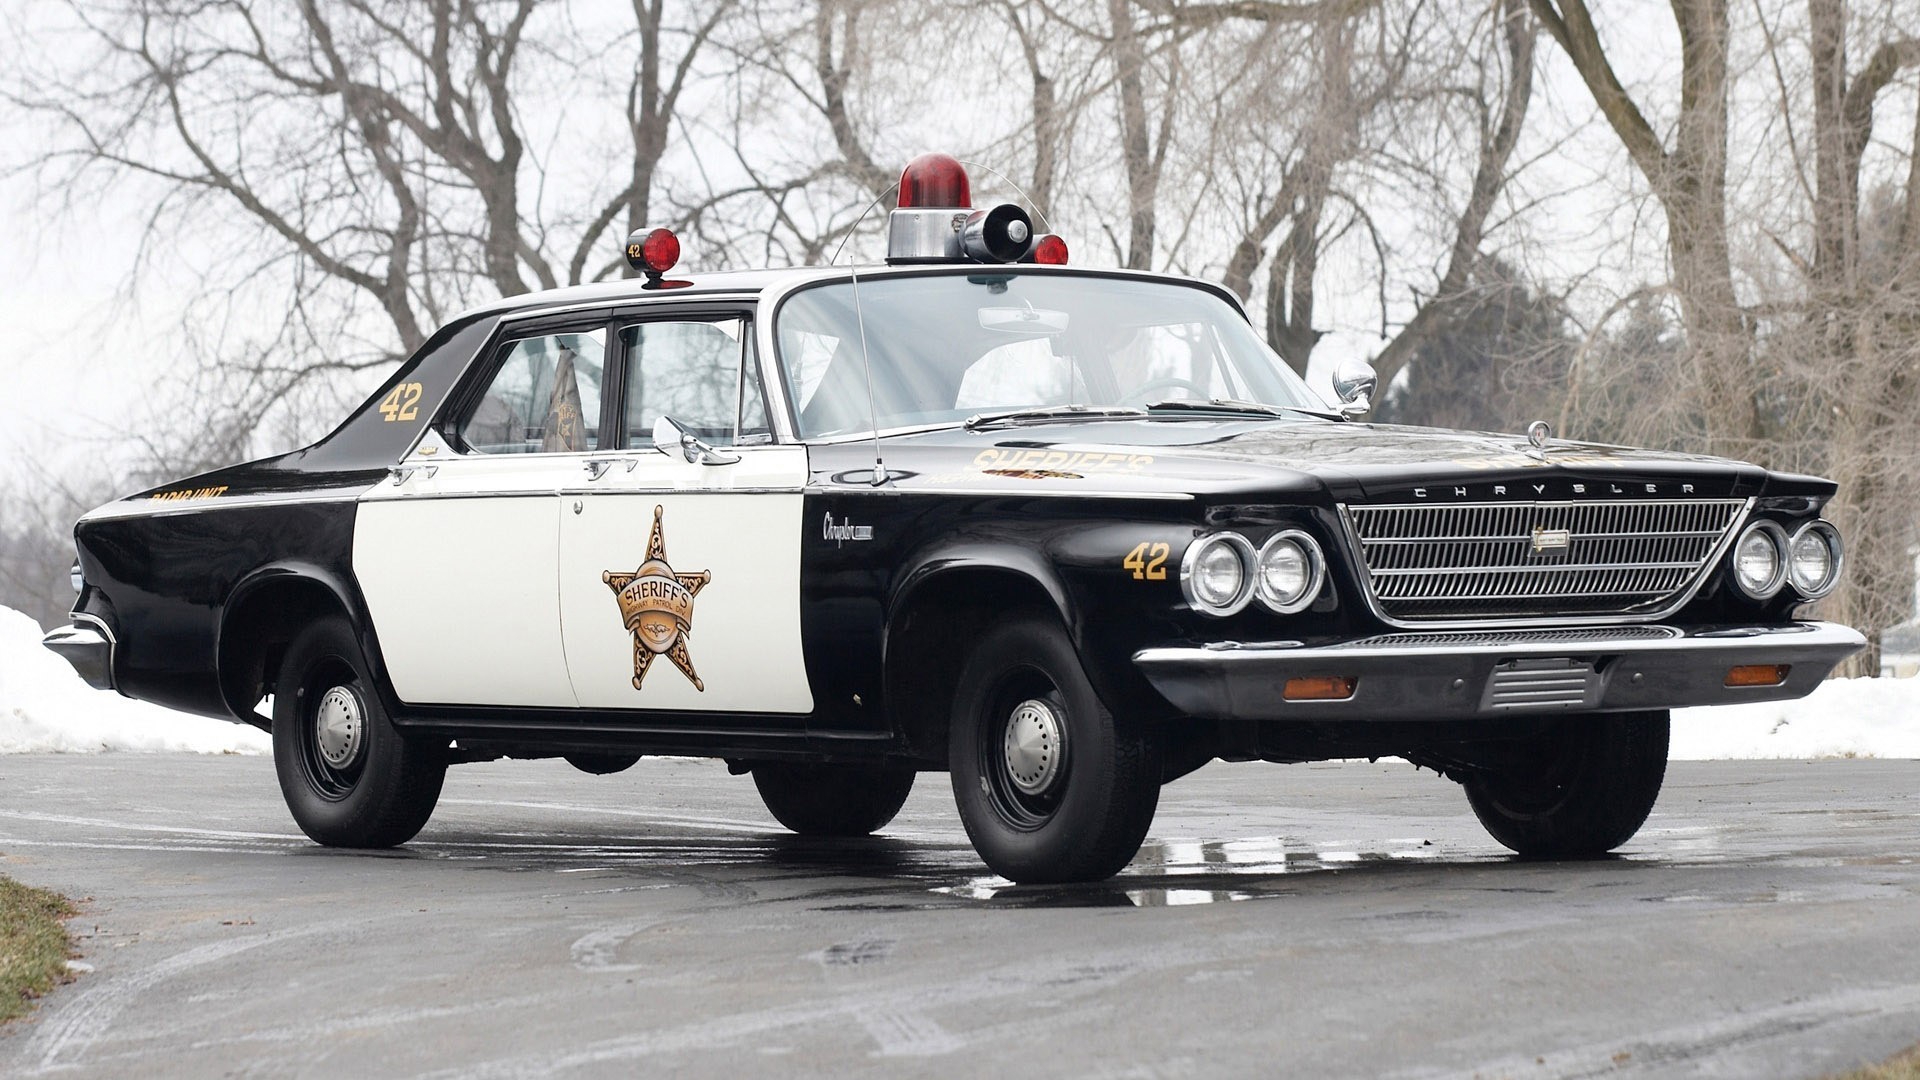 General 1920x1080 car police police cars old car Chrysler sheriff road Chrysler 300 vehicle Chevrolet